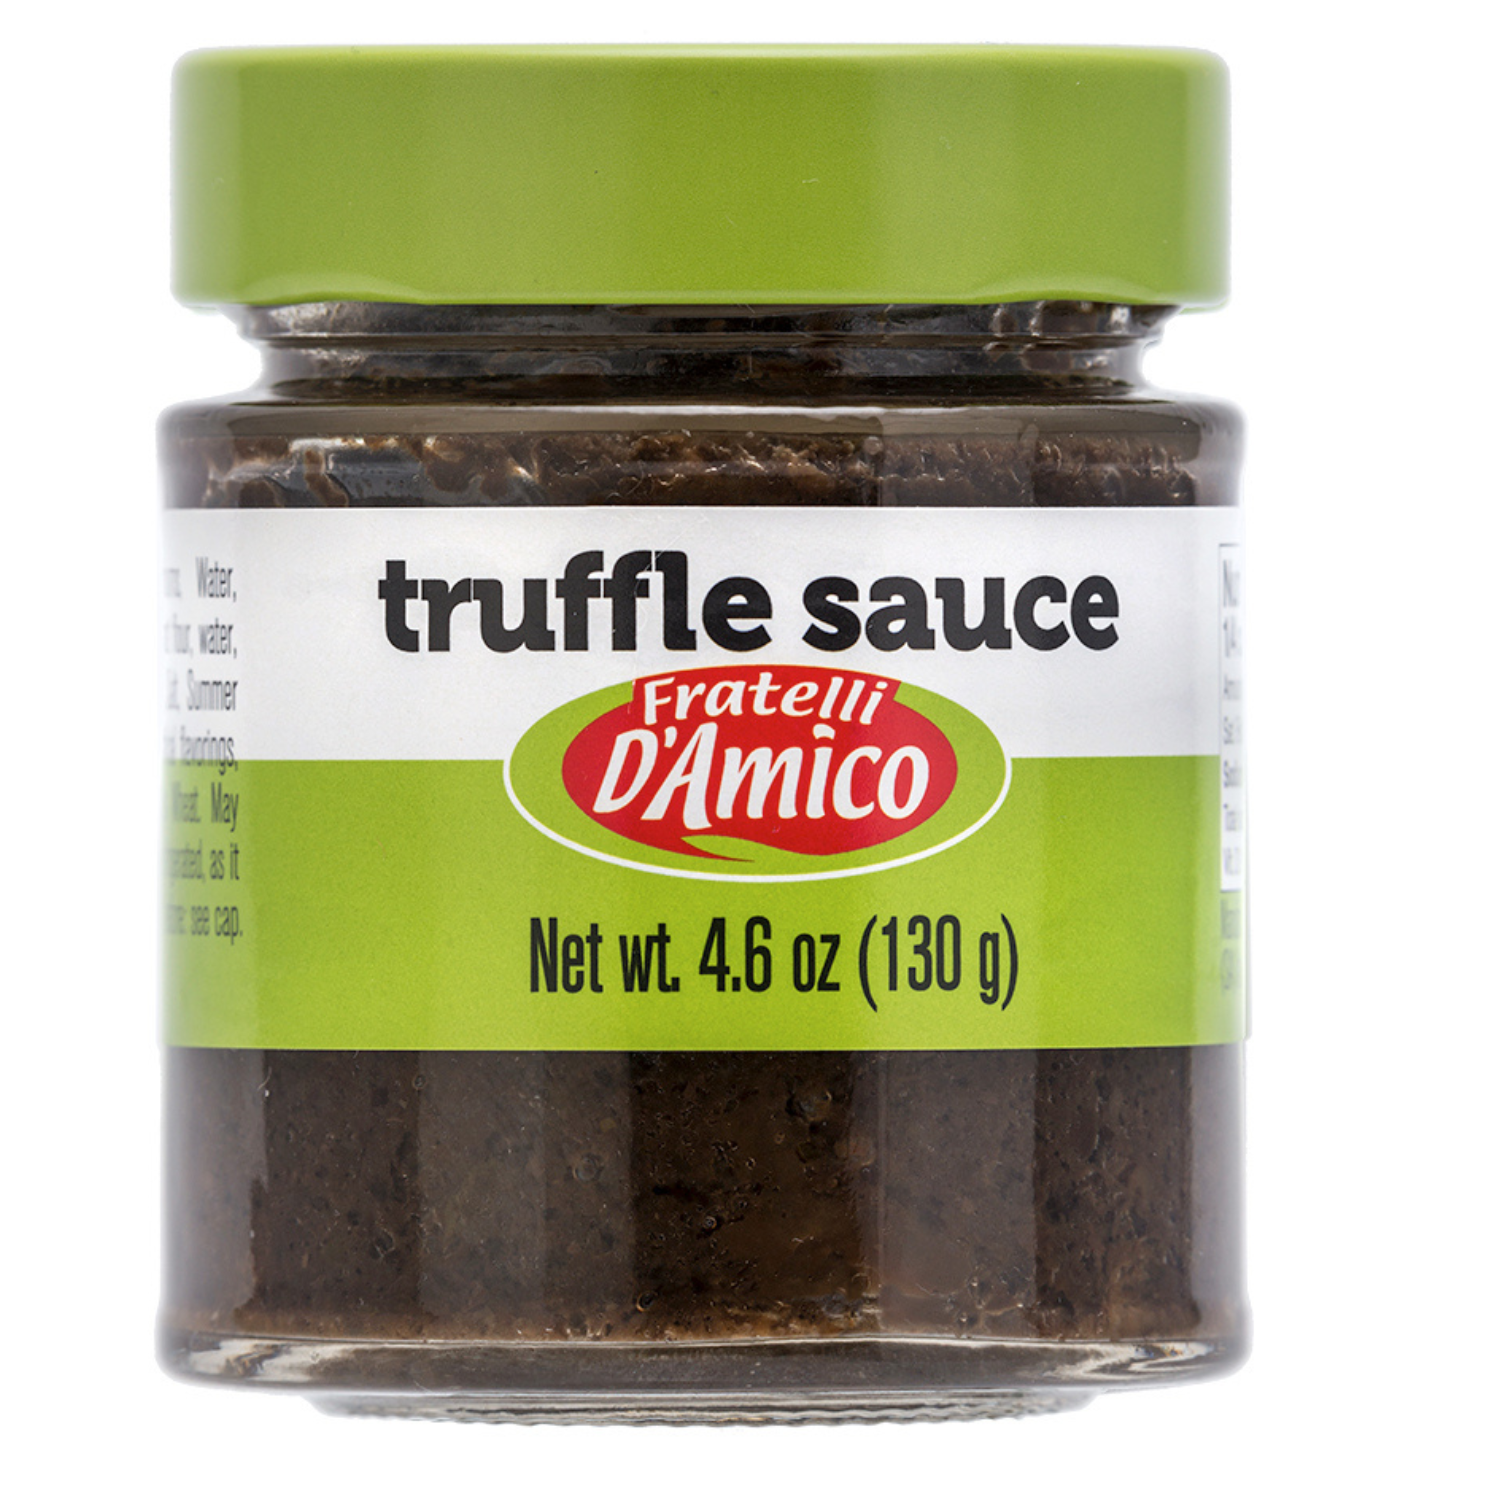 Fratelli D'Amico Truffle Sauce. Net Wt. 4.06oz (130g).